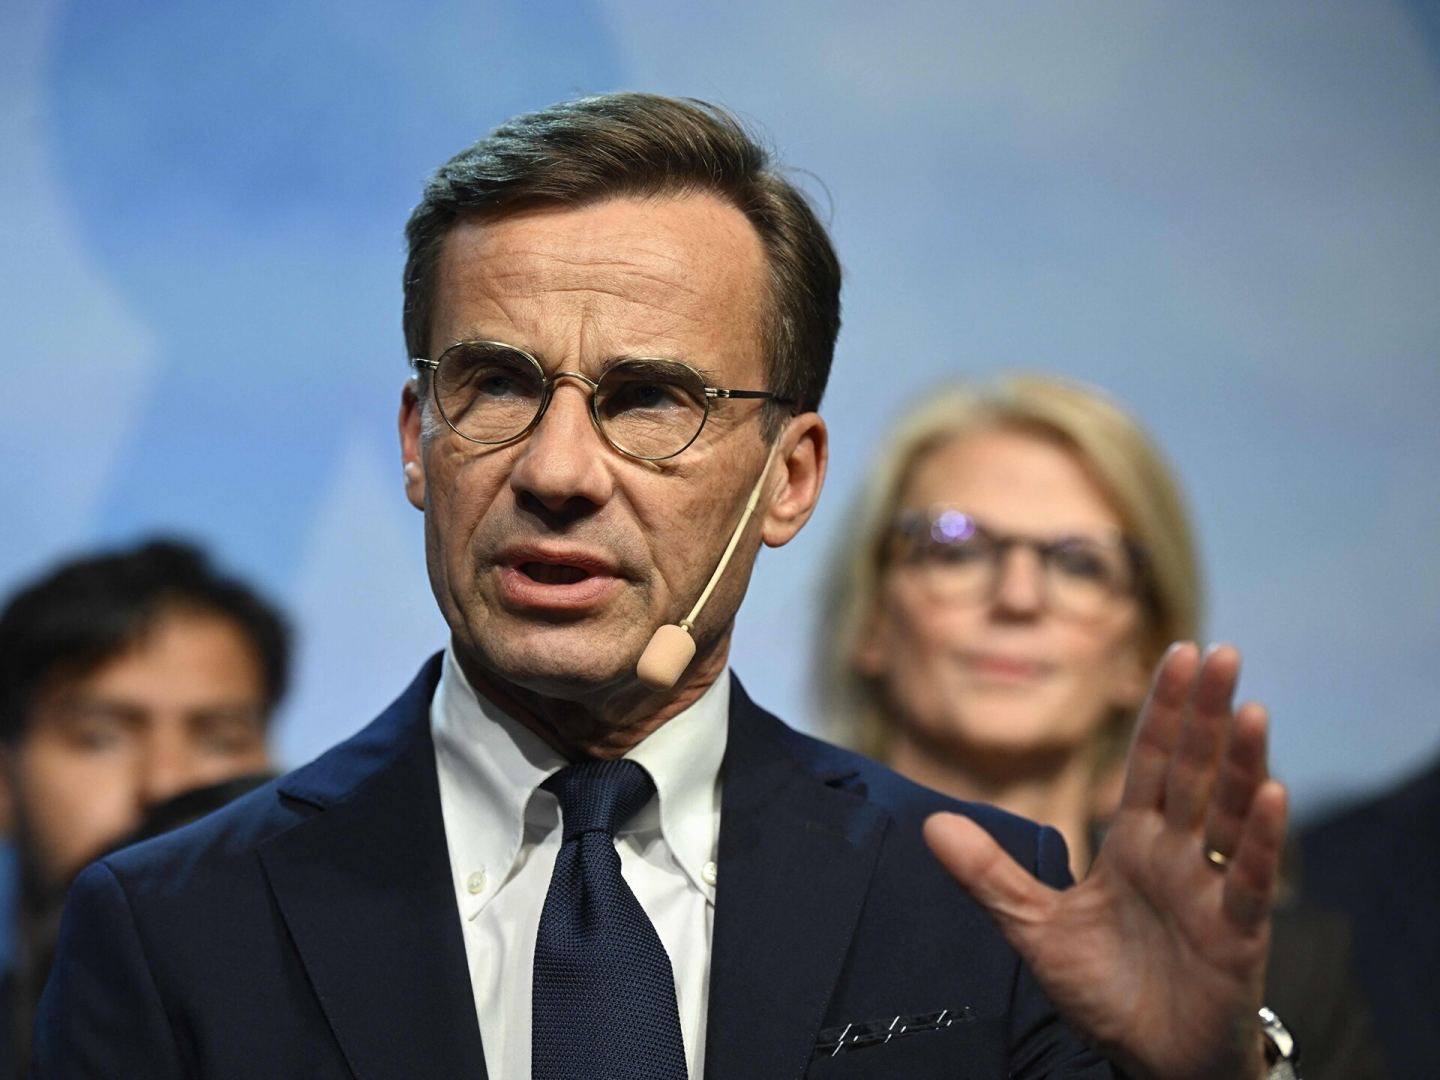 Sweden to keep promise on Türkiye's fight against terrorism - Swedish PM